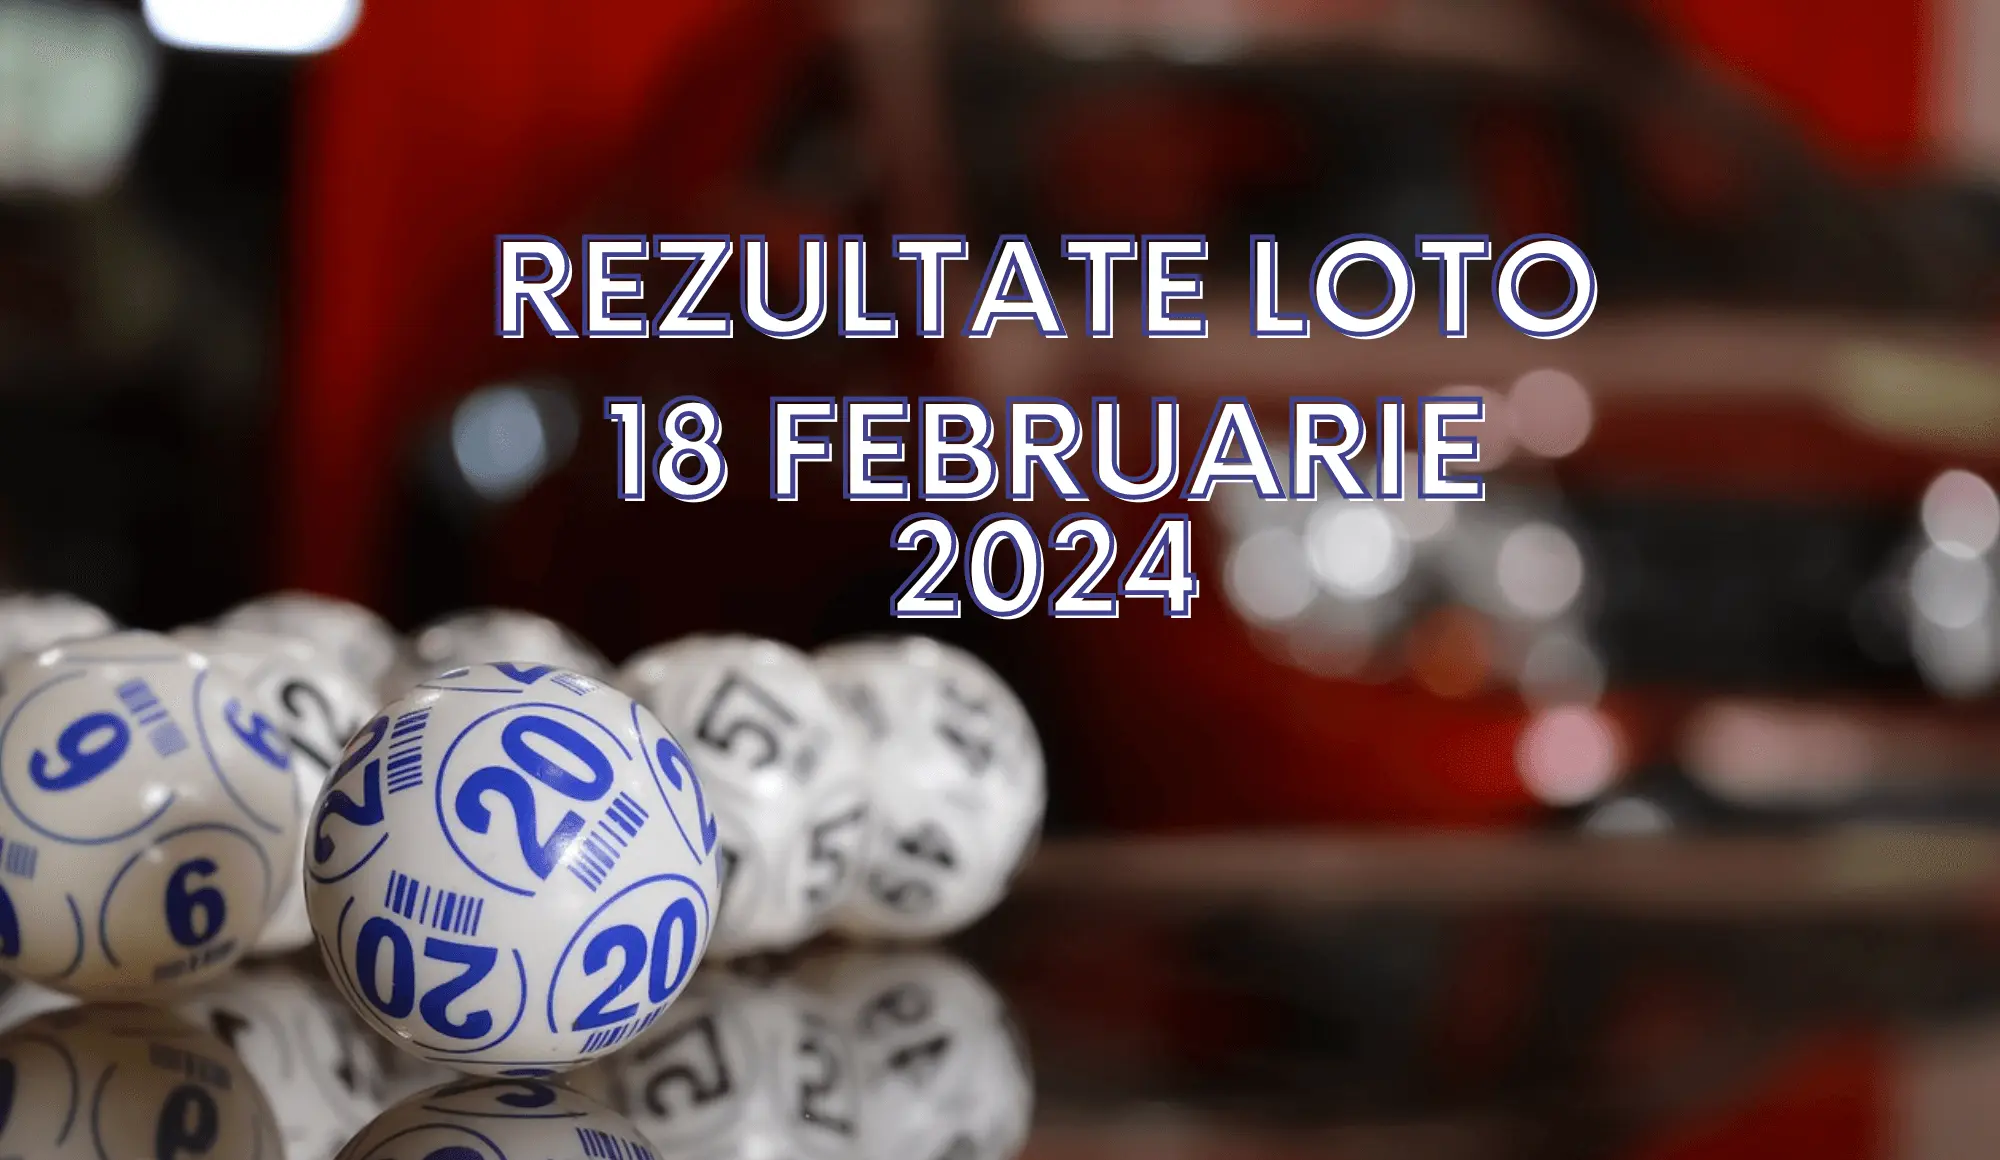 Rezultate Loto 18 februarie 2024 – Loto 6/49, Loto 5/40, Joker și Noroc